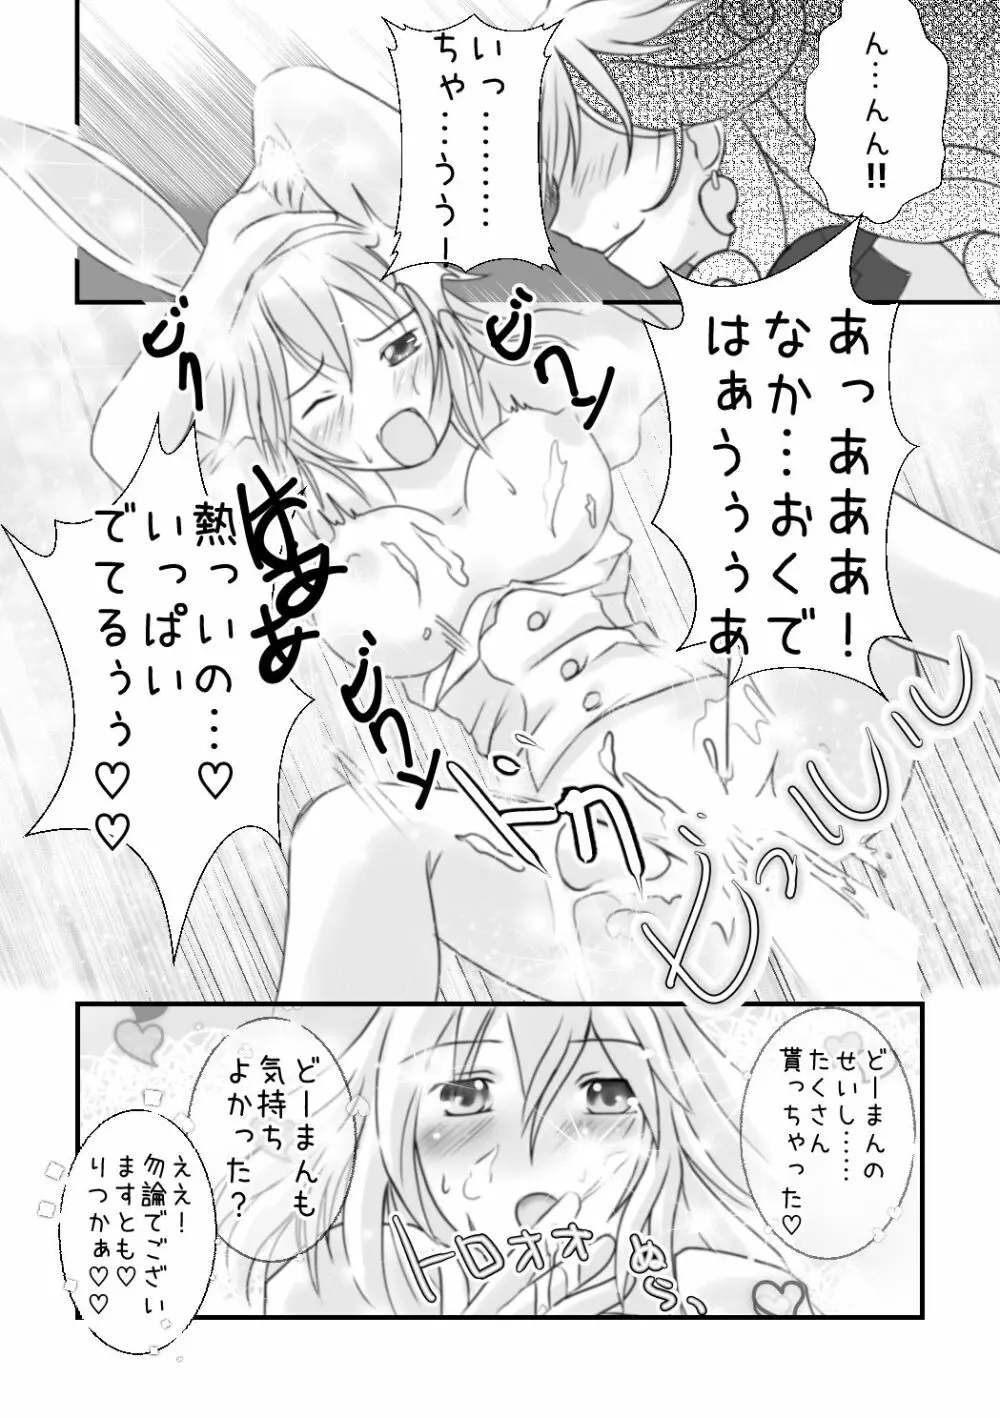 ] Rin guda ♀ rakugaki guda yuru manga(Fate/Grand Order] - page6